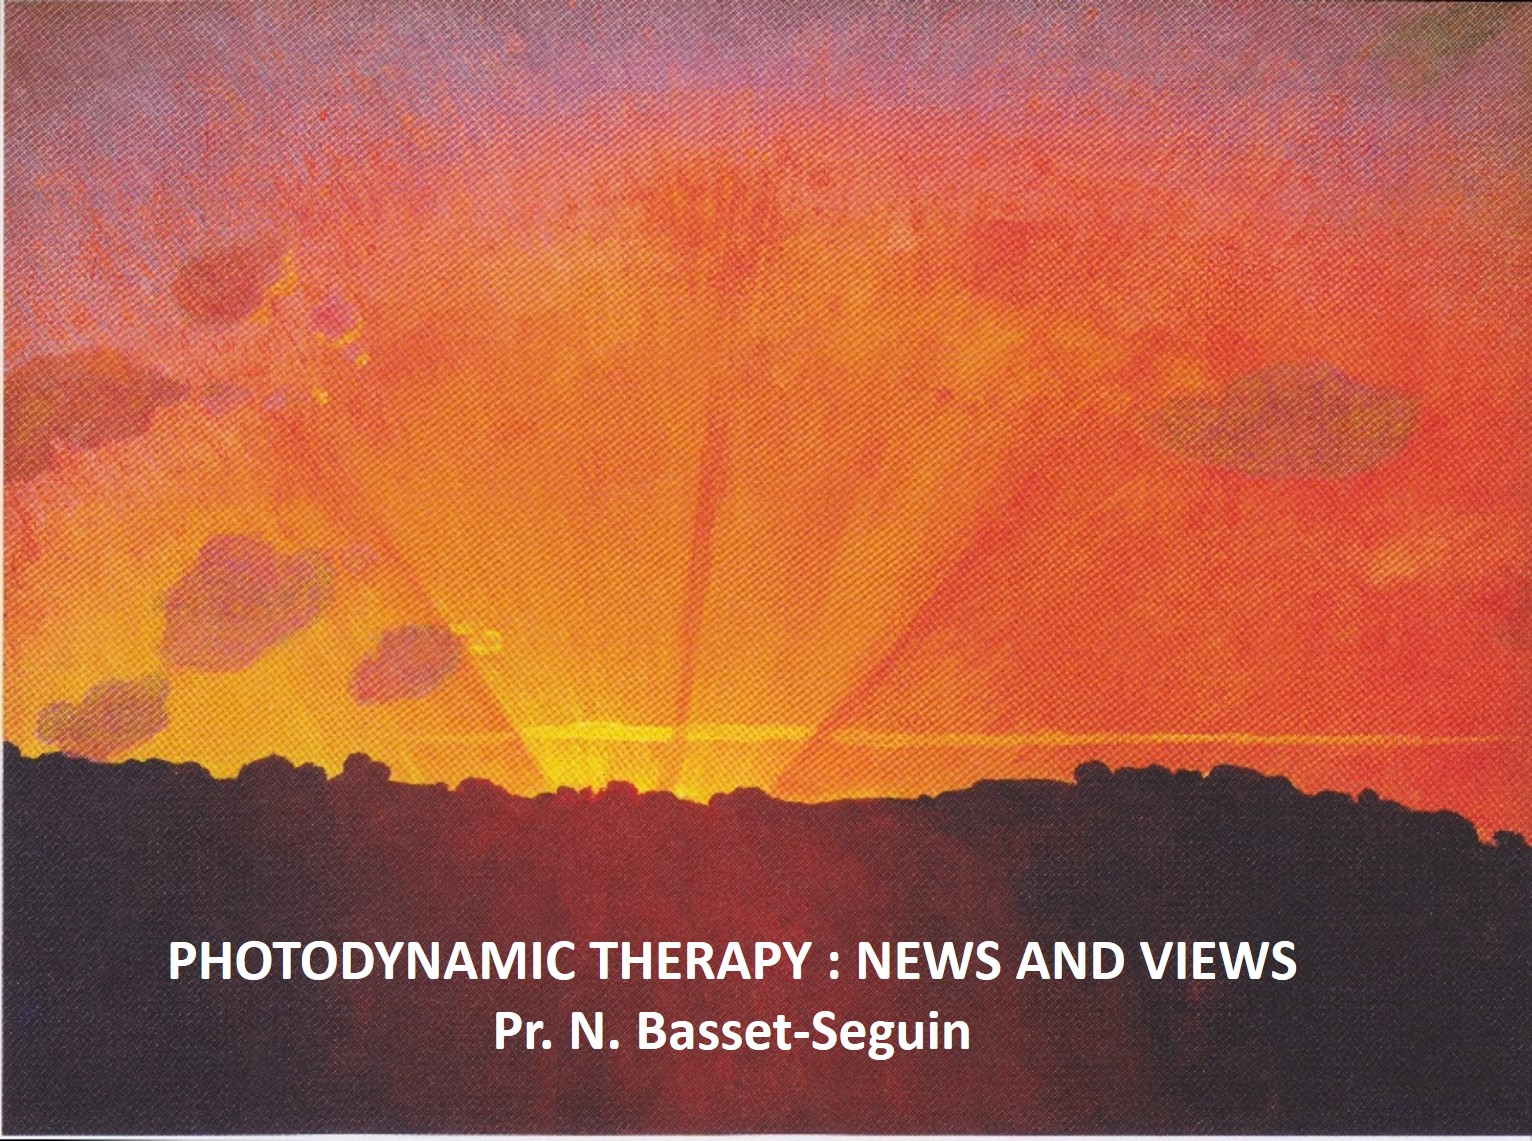 PHOTODYNAMIC THERAPY NEWS ANS VIEWS: Pr. N. Basset-Seguin